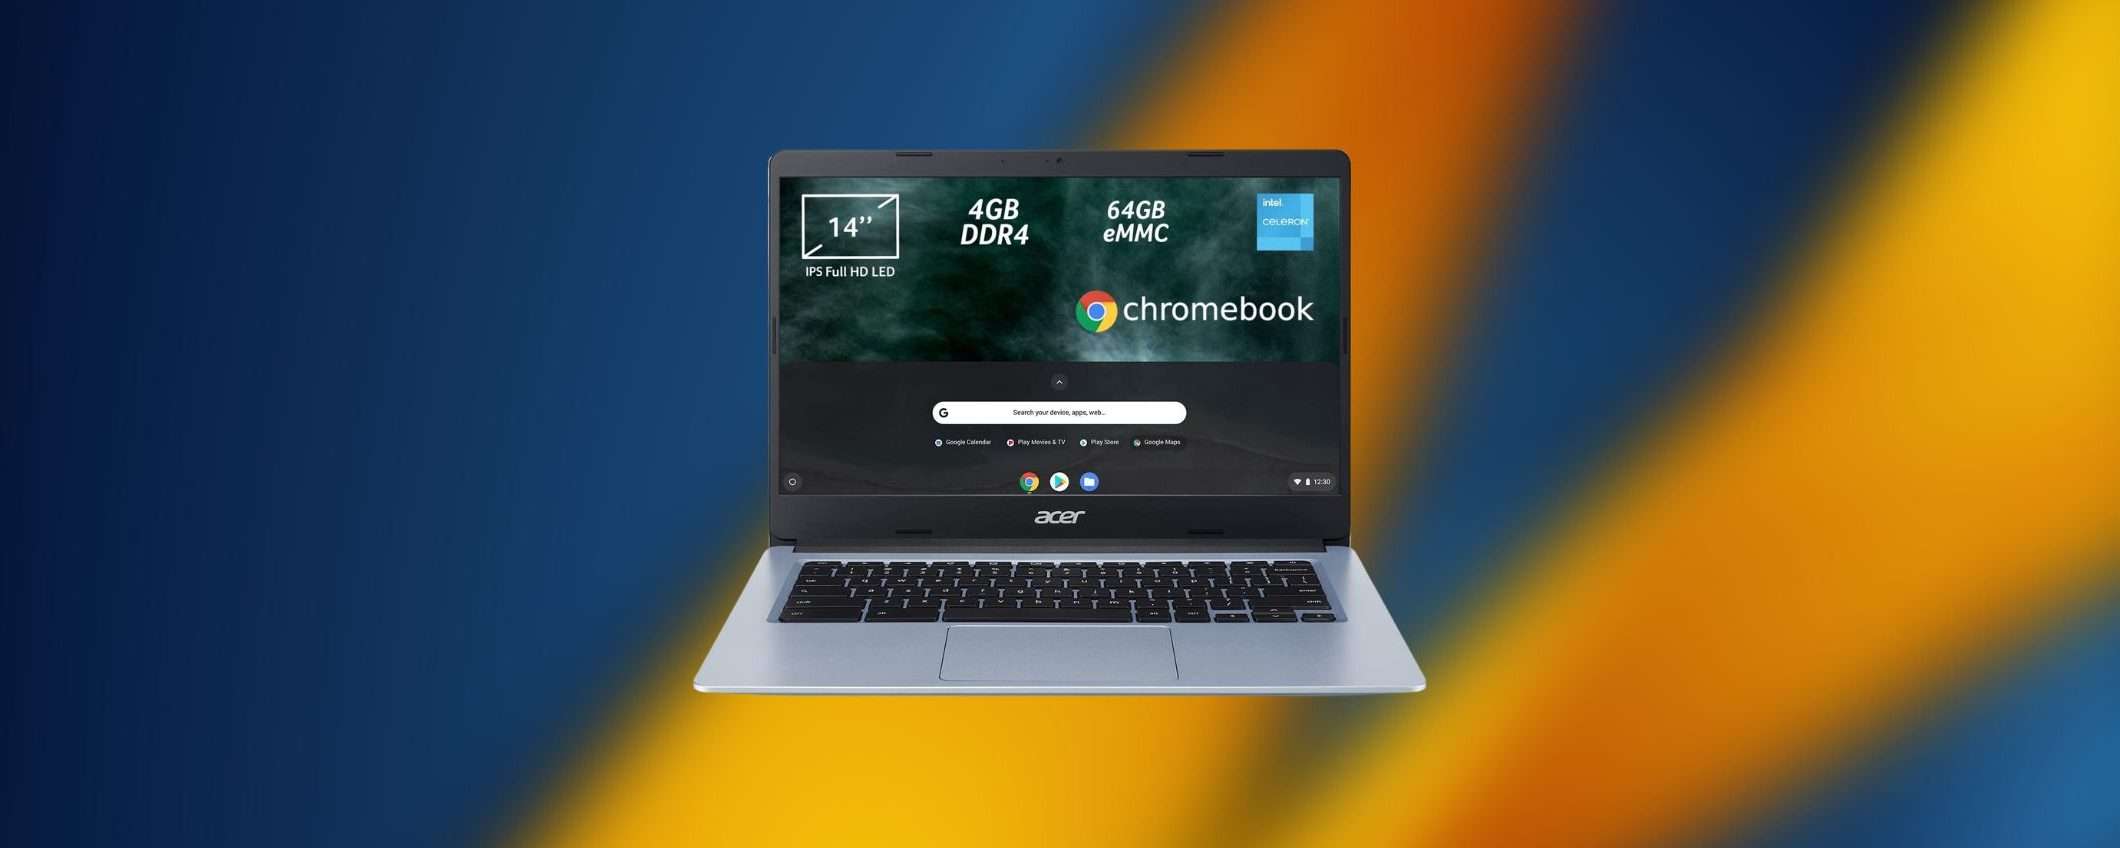 Acer Chromebook 314, OFFERTA LAMPO su Amazon (-70€)